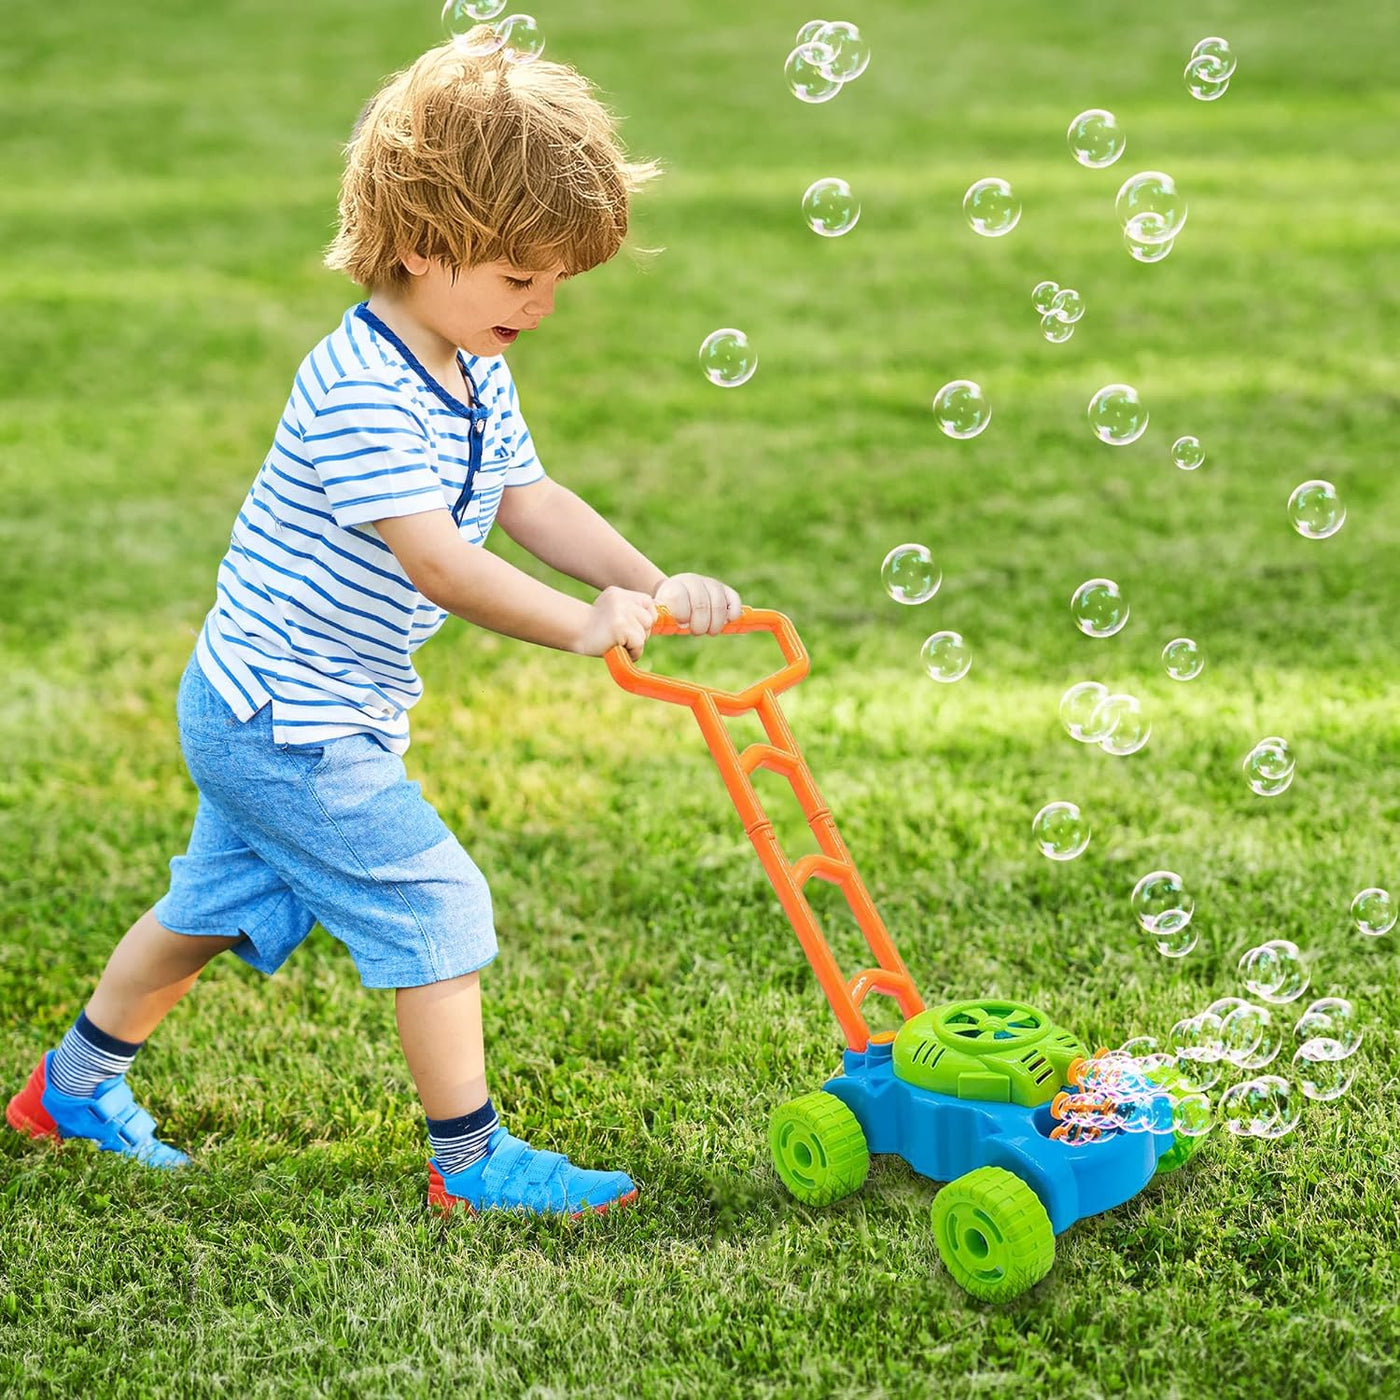 Bubble Lawn Mower for Kids